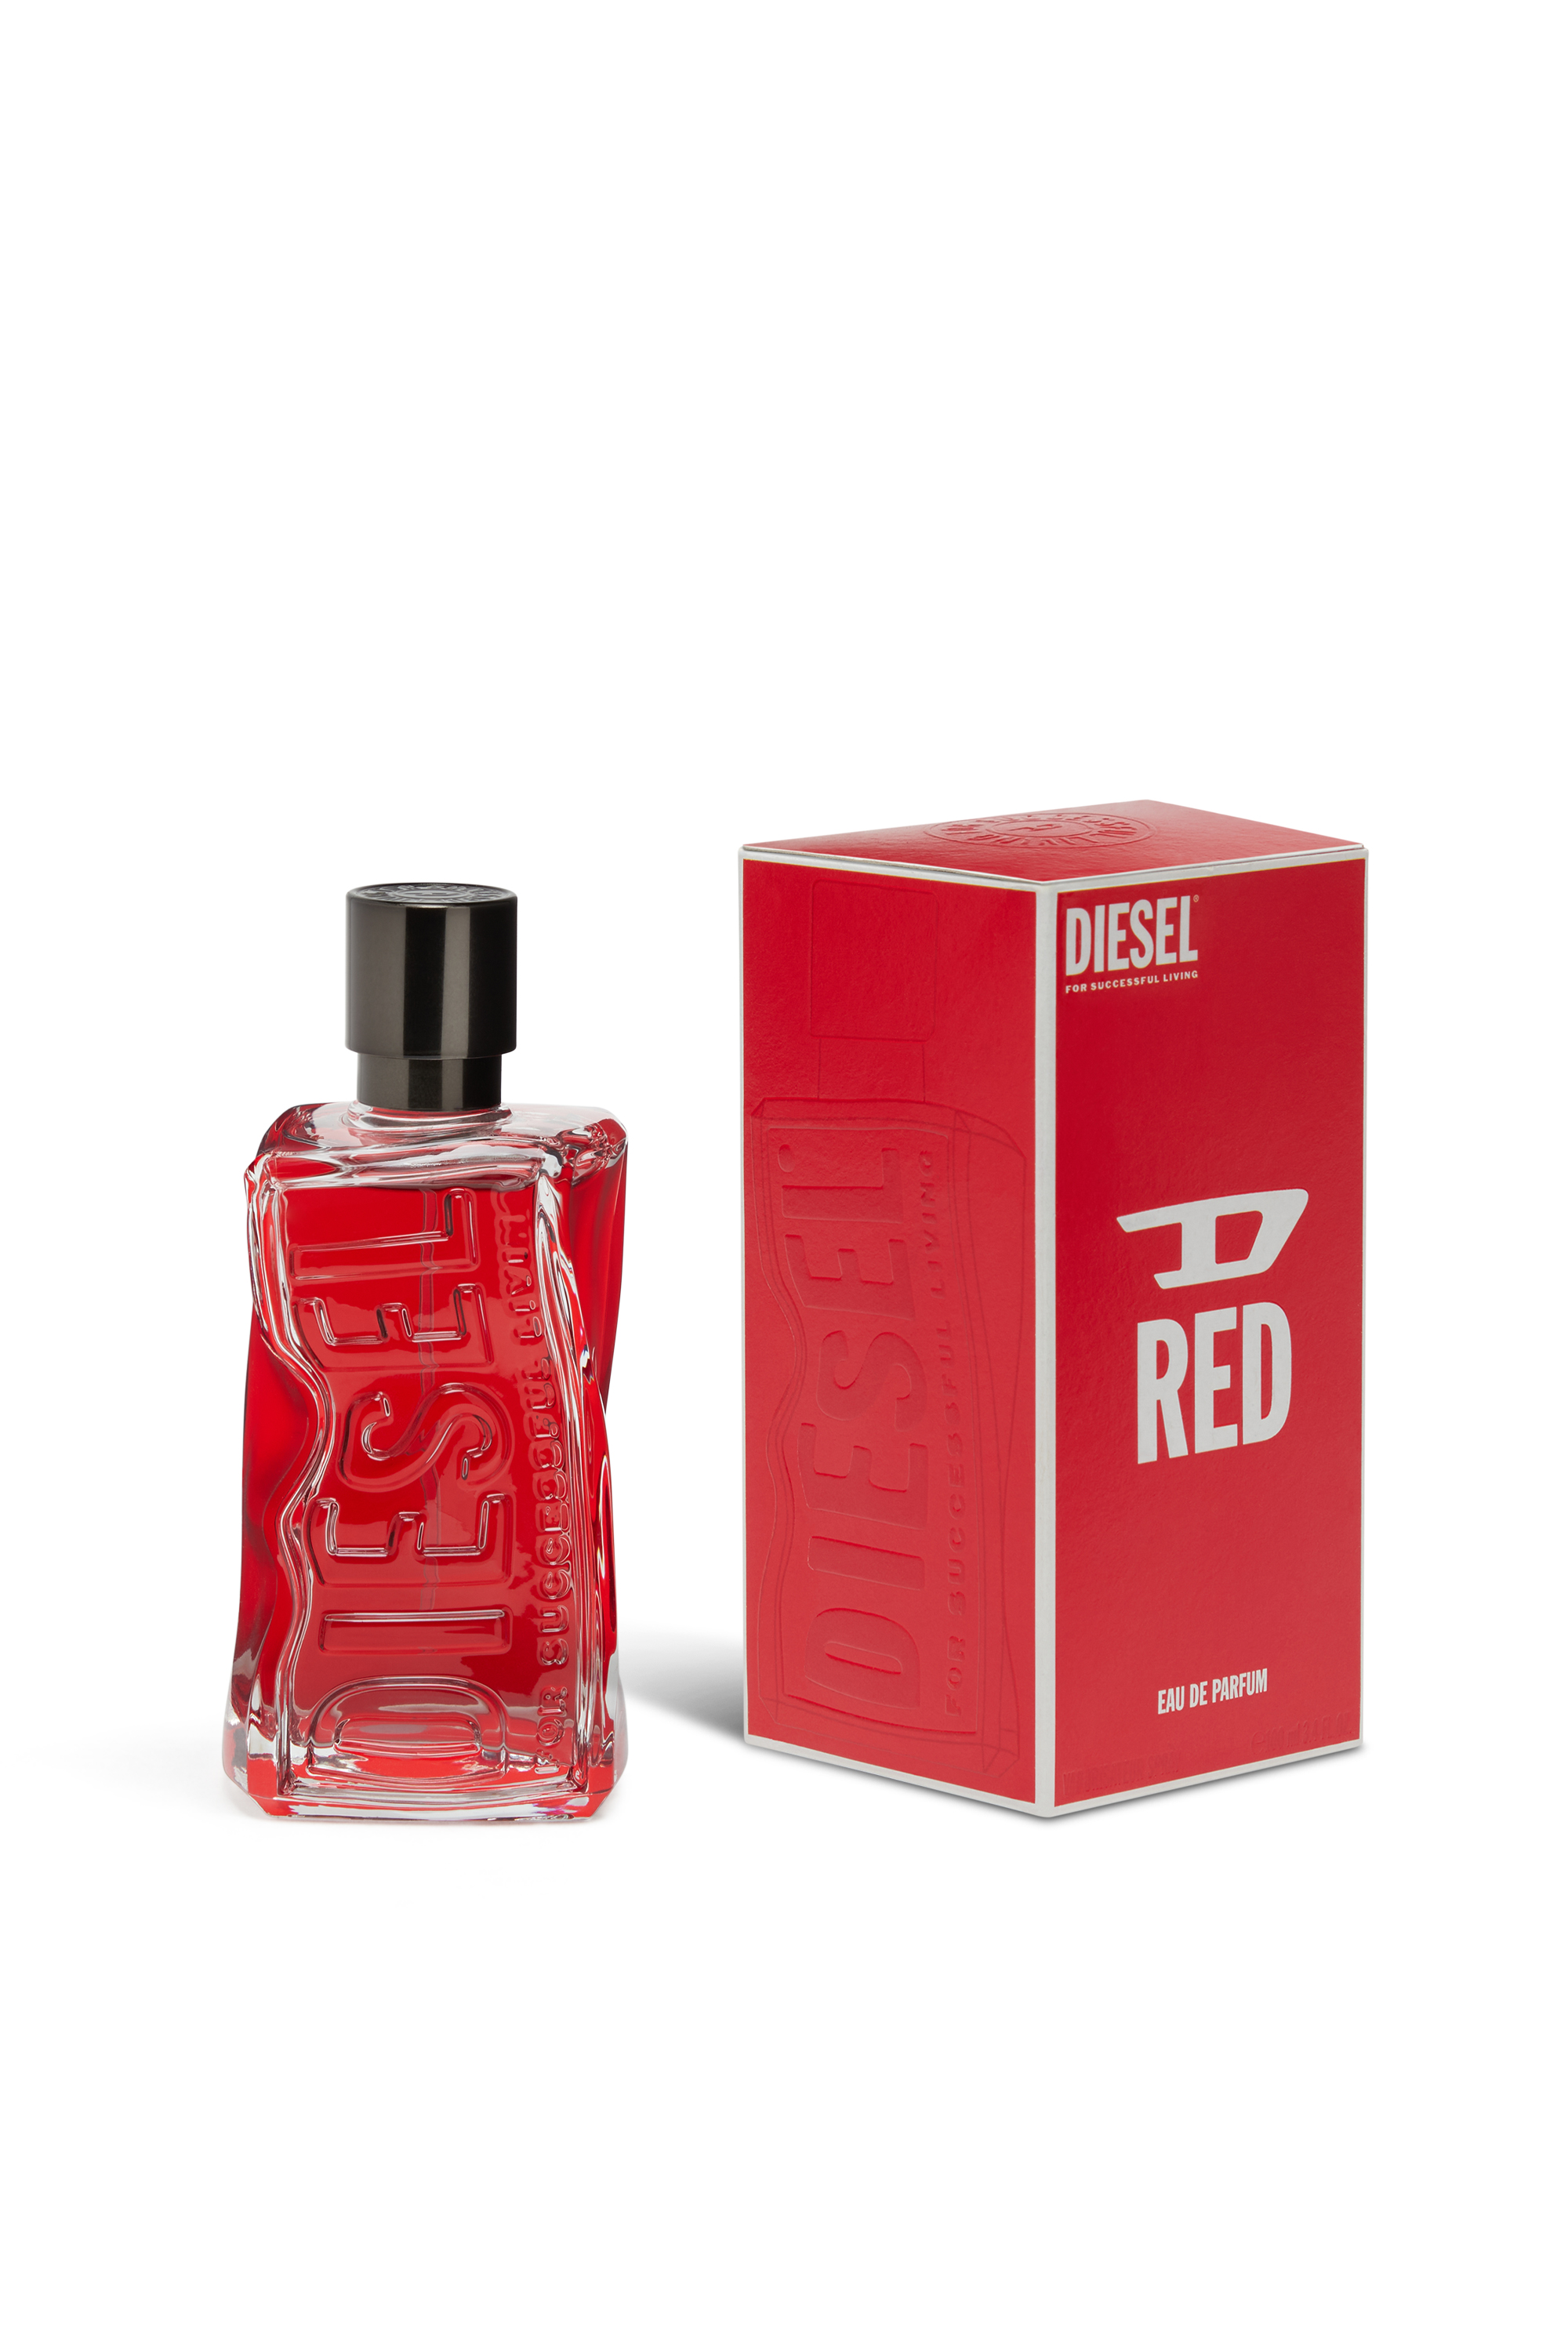 Diesel - D RED 50 ML, レッド - Image 2